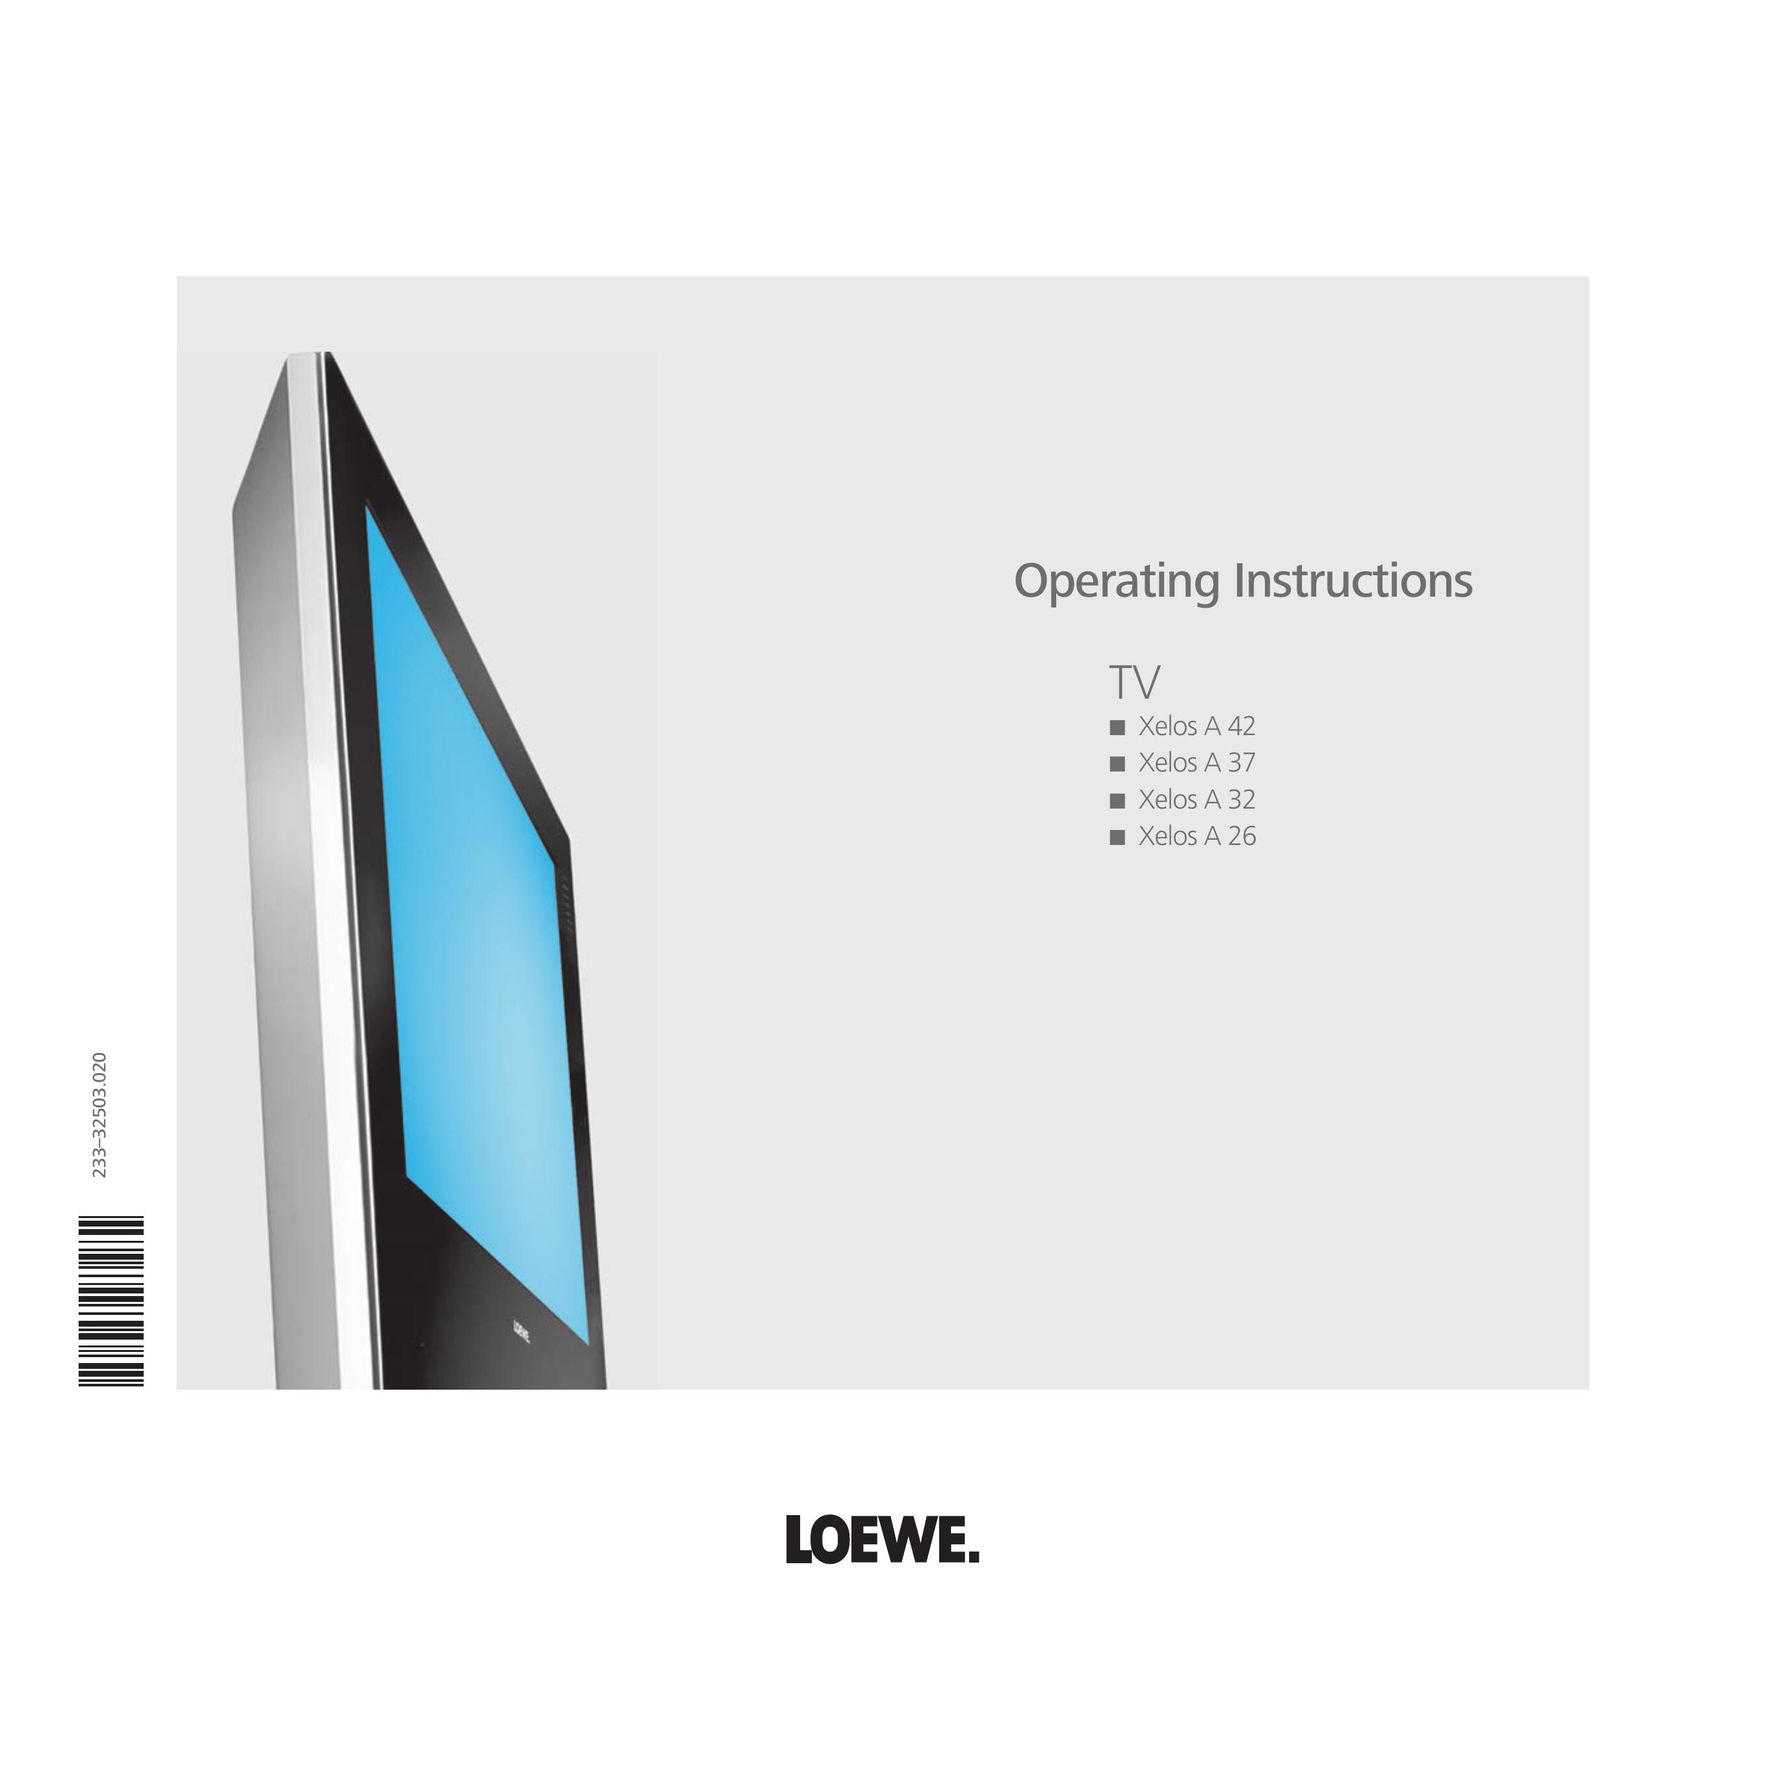 Loewe A 26 Flat Panel Television User Manual